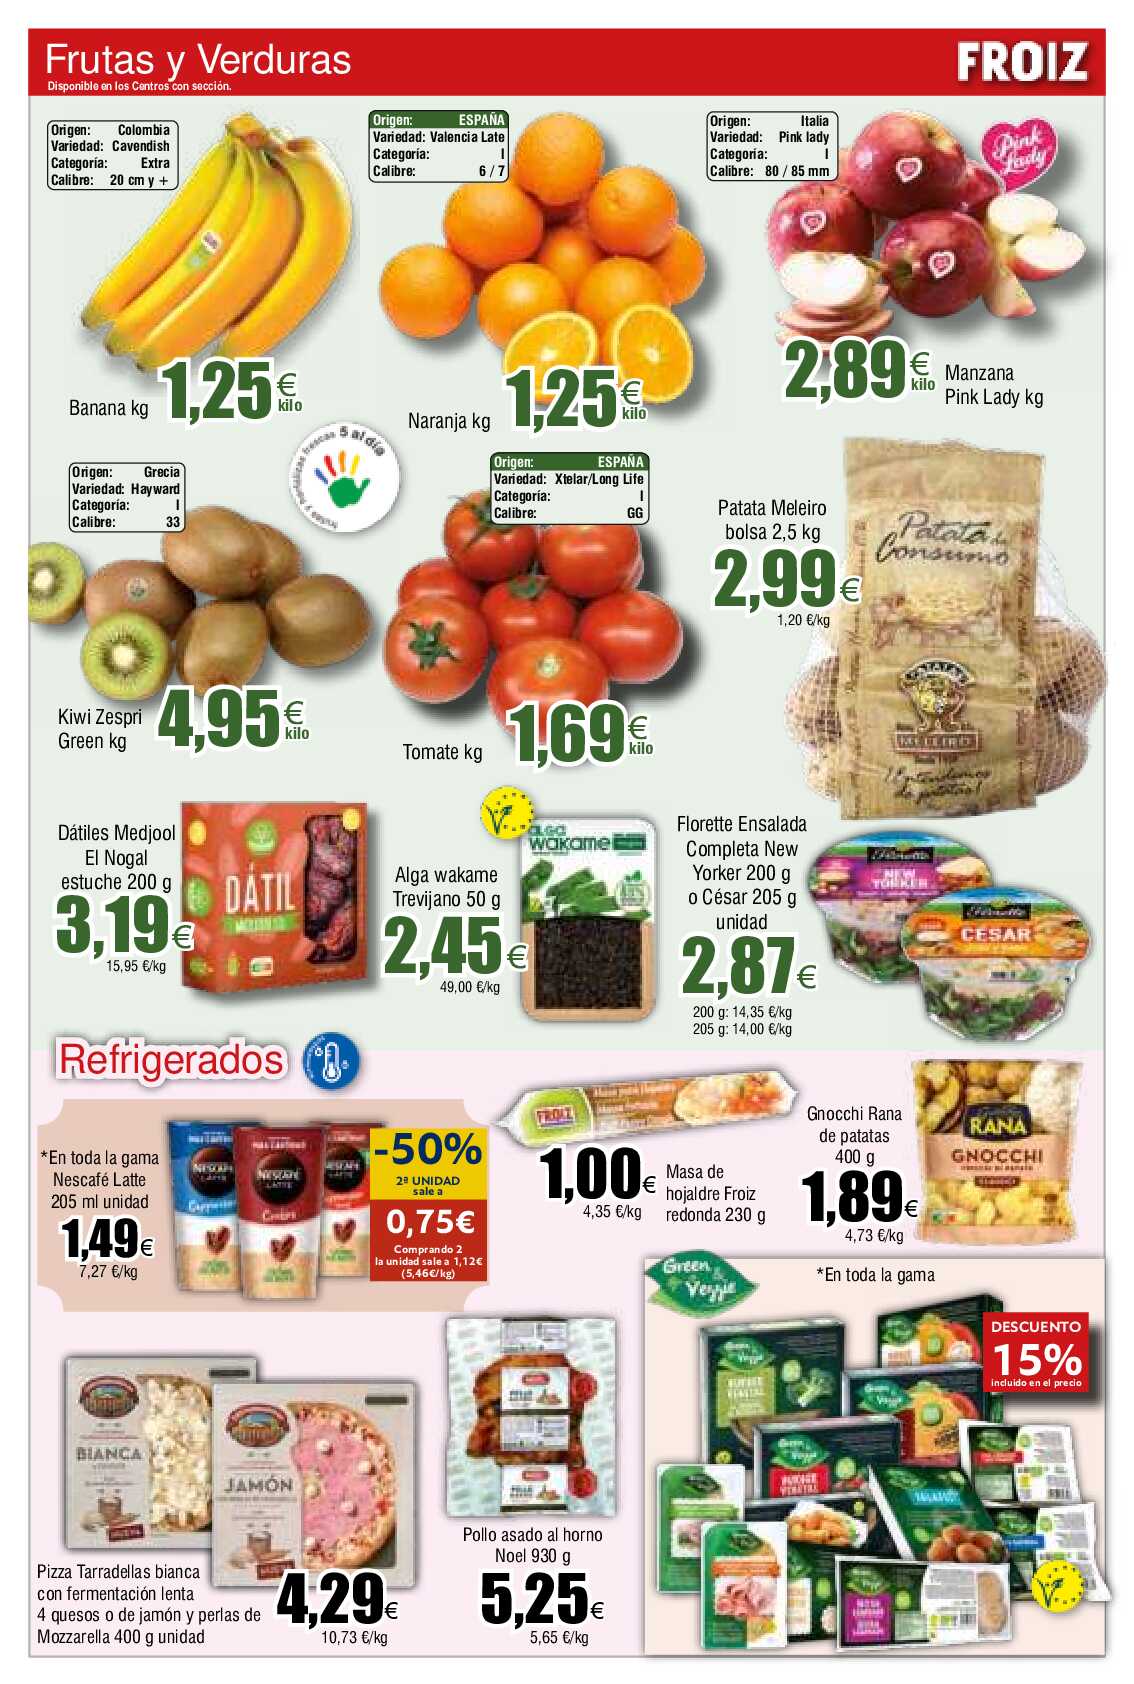 Ofertas supermercado Froiz. Página 02